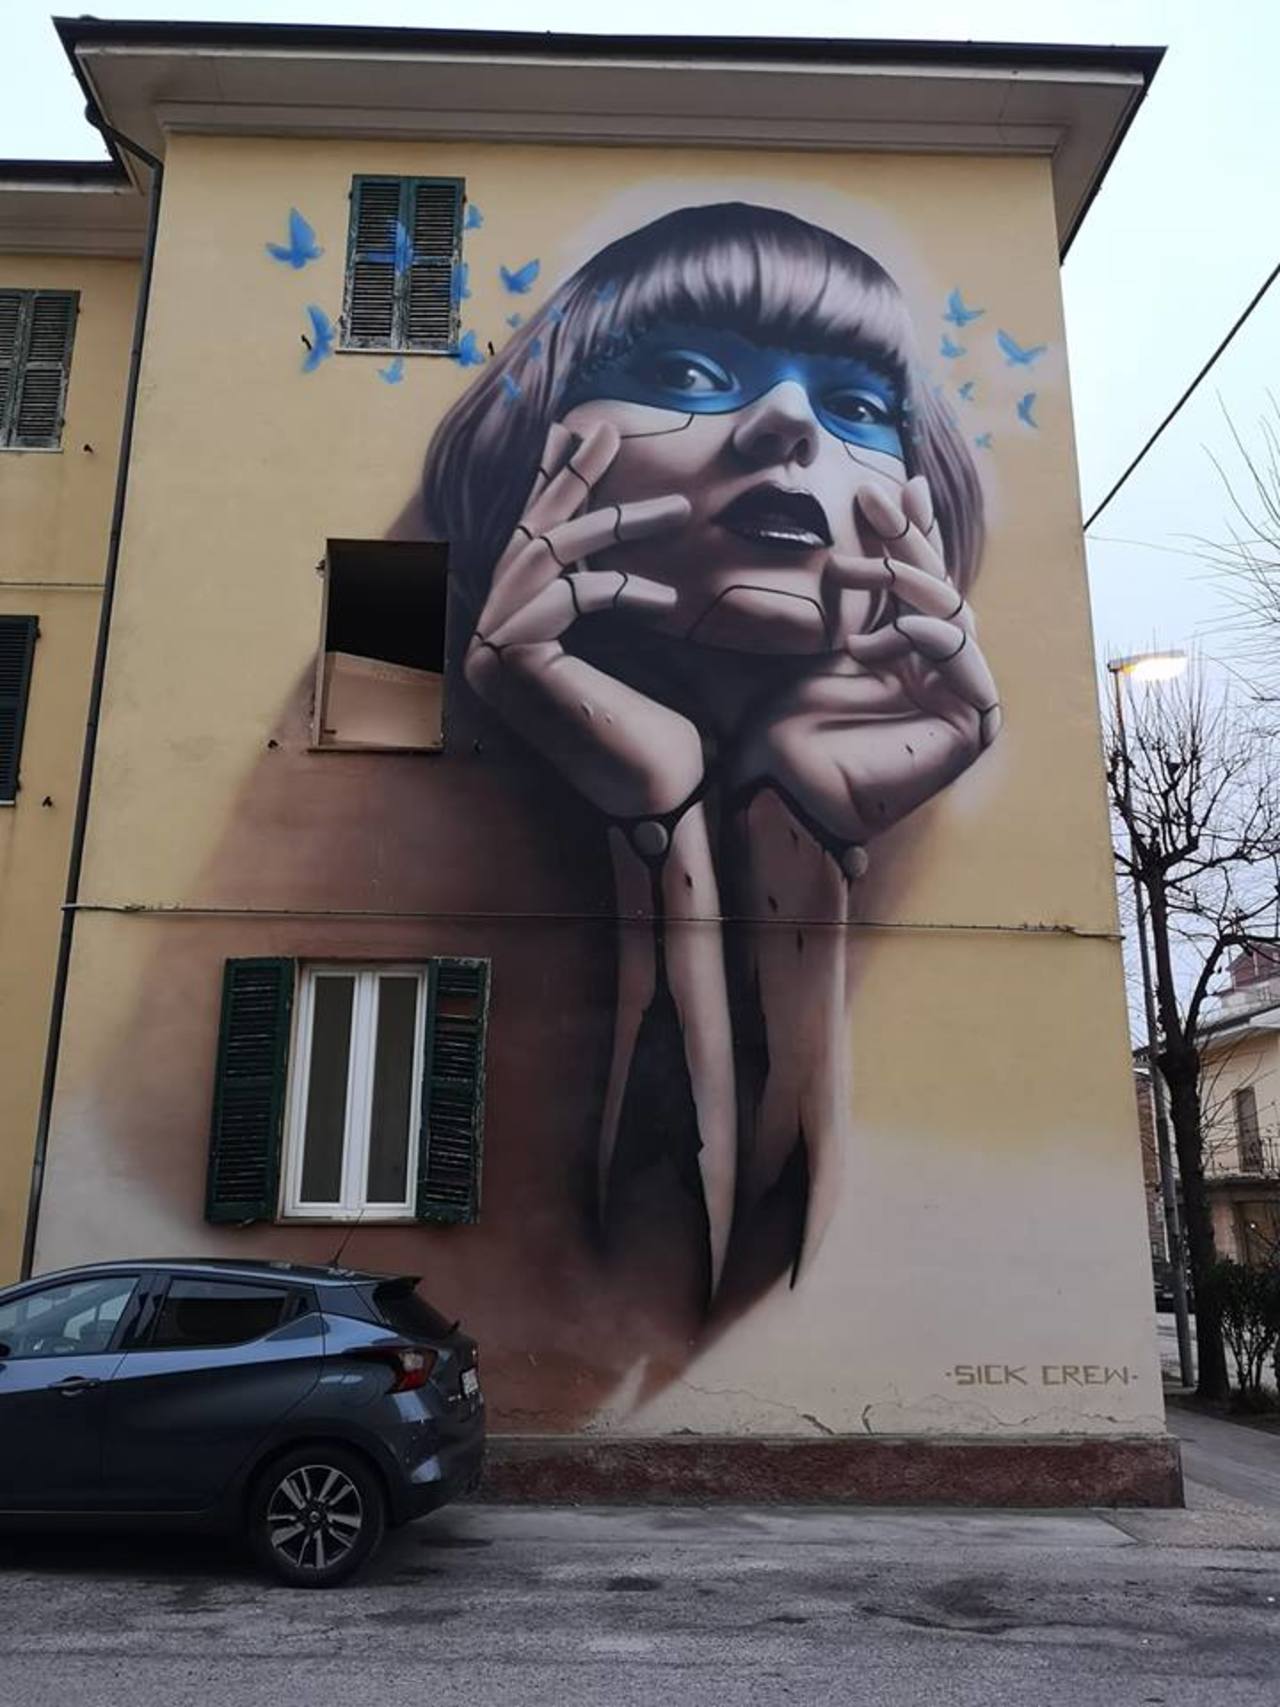 ... beauty and lightness in a different view. Art by Sick Crew in Civitanova Marche, Italy #StreetArt #Art #Beauty #DifferentView #Graffiti #Mural #UrbanArt #Macerata https://t.co/k51OQ1m1Il